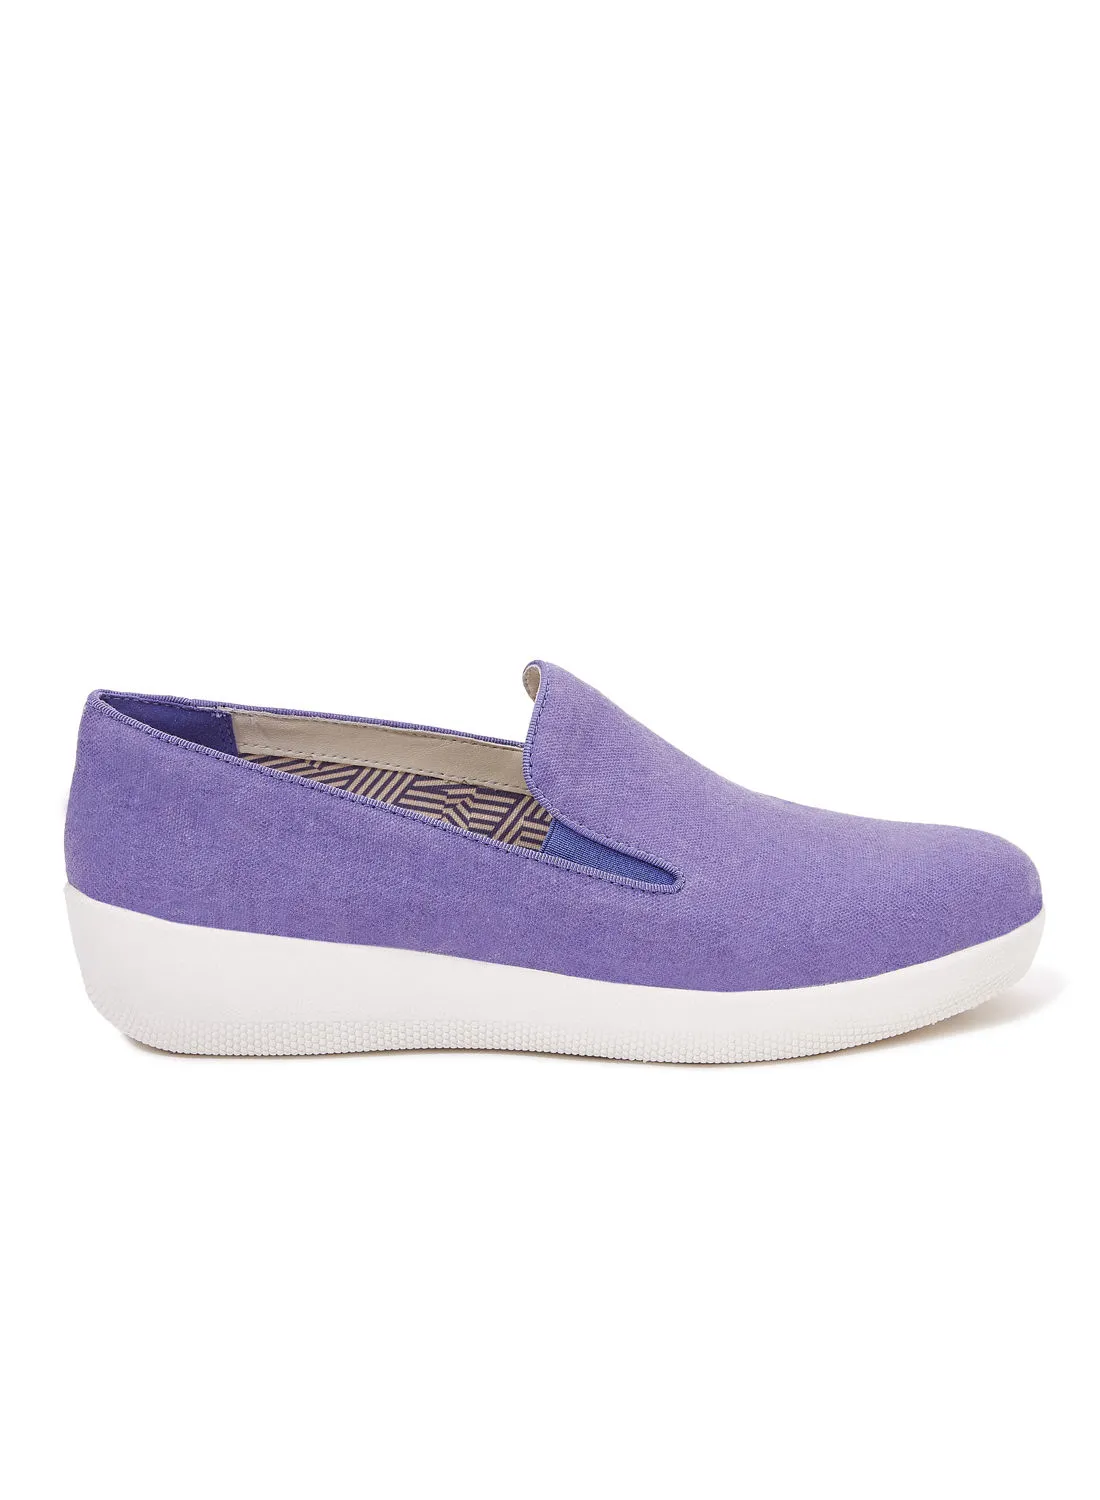 fitflop Superskate Loafers Violet/White